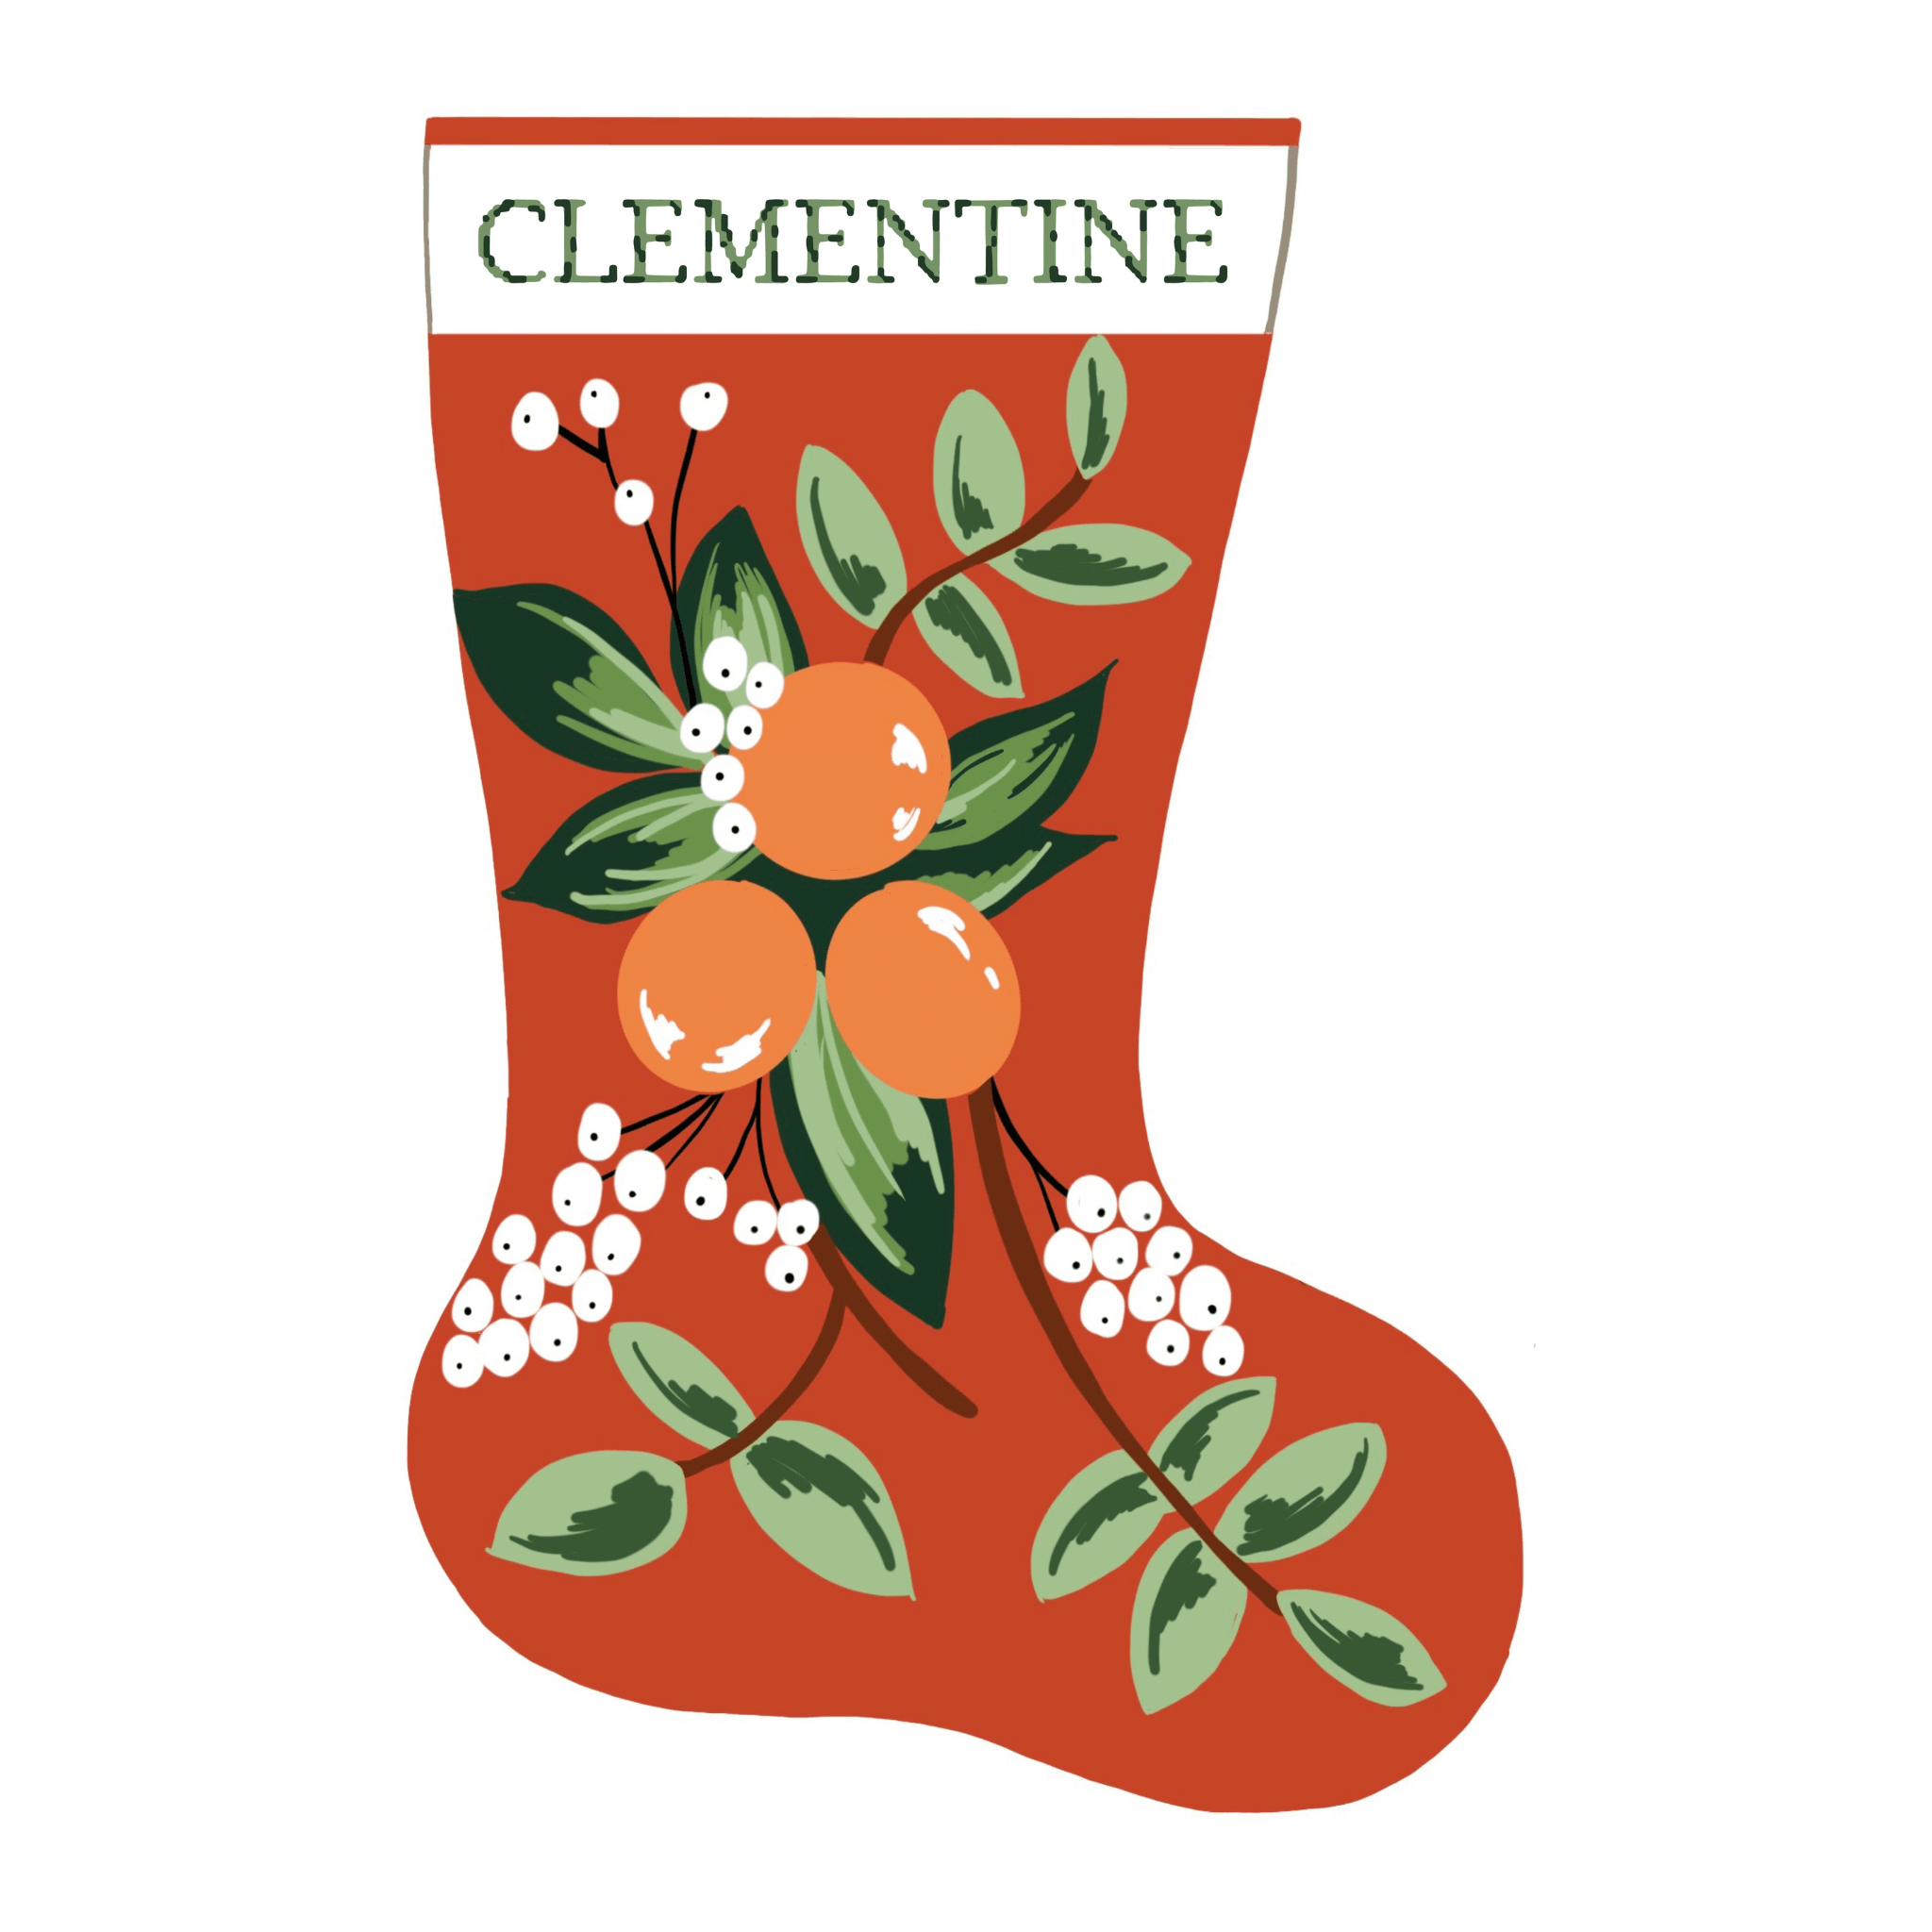 Christmas Tree Heirloom Needlepoint Stocking | Current Catalog